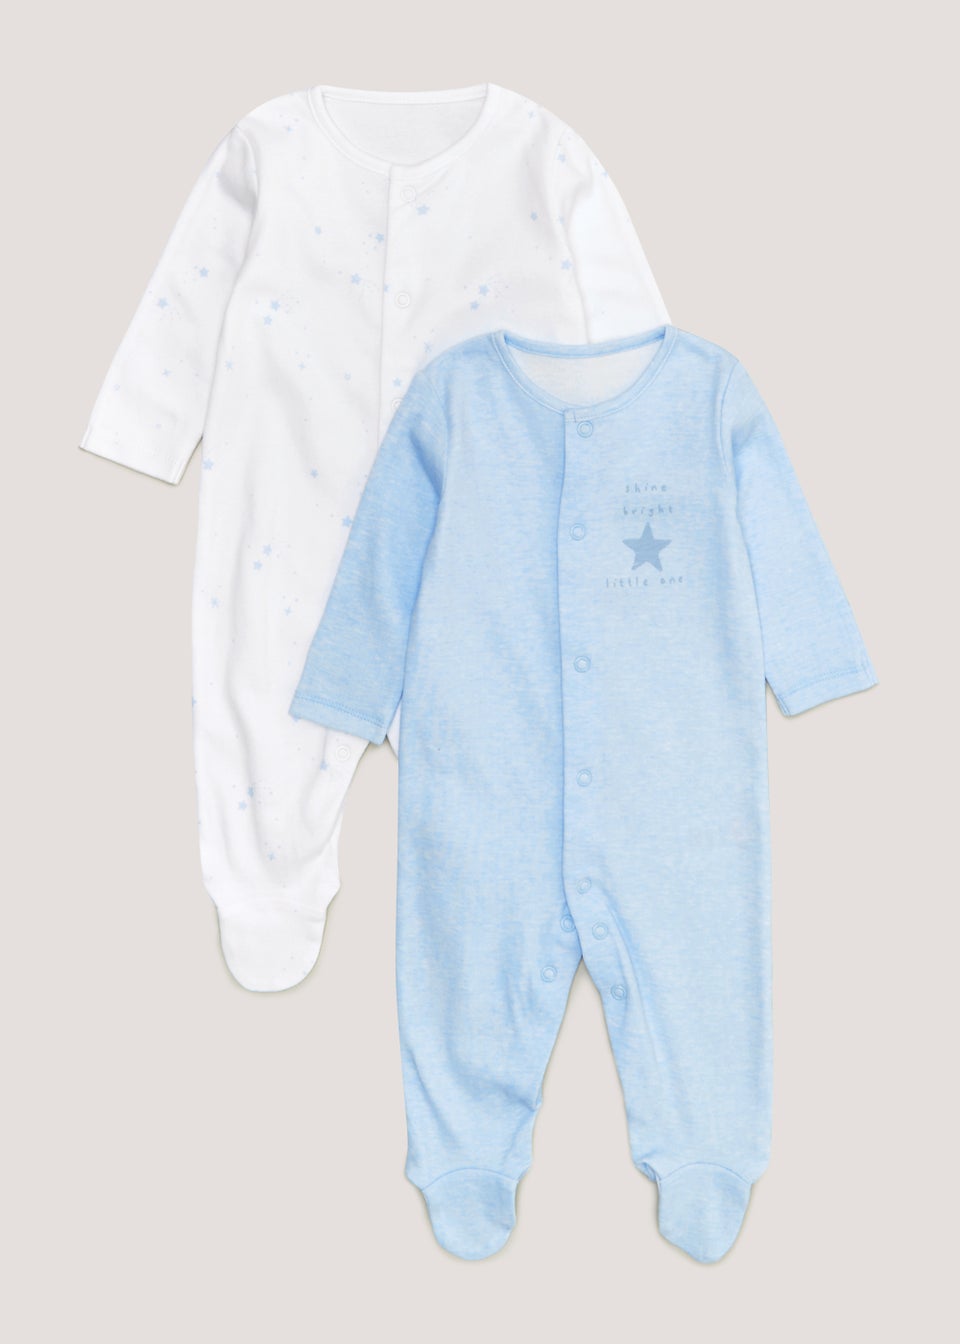 Baby 2 Pack White & Blue Sleepsuits (Newborn-23mths)